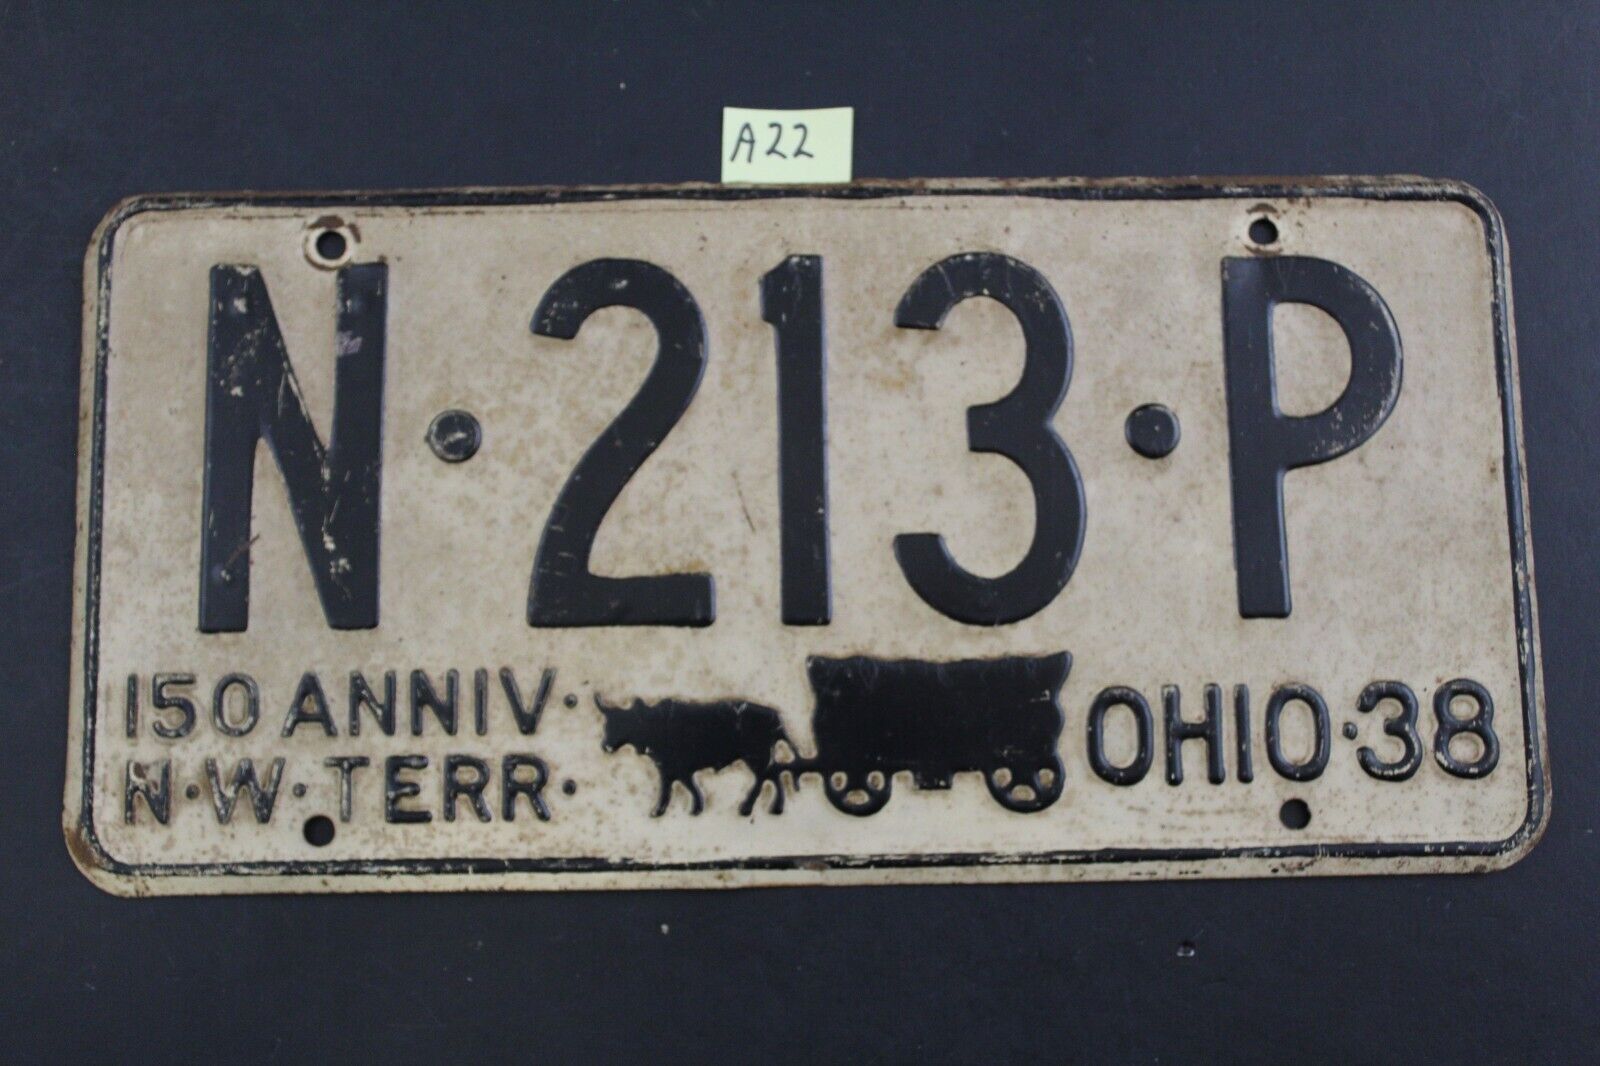 Vintage - 1938 OHIO LICENSE PLATE - N 213 P - 150 ANNIV N W TERRITORY PLATE (A22